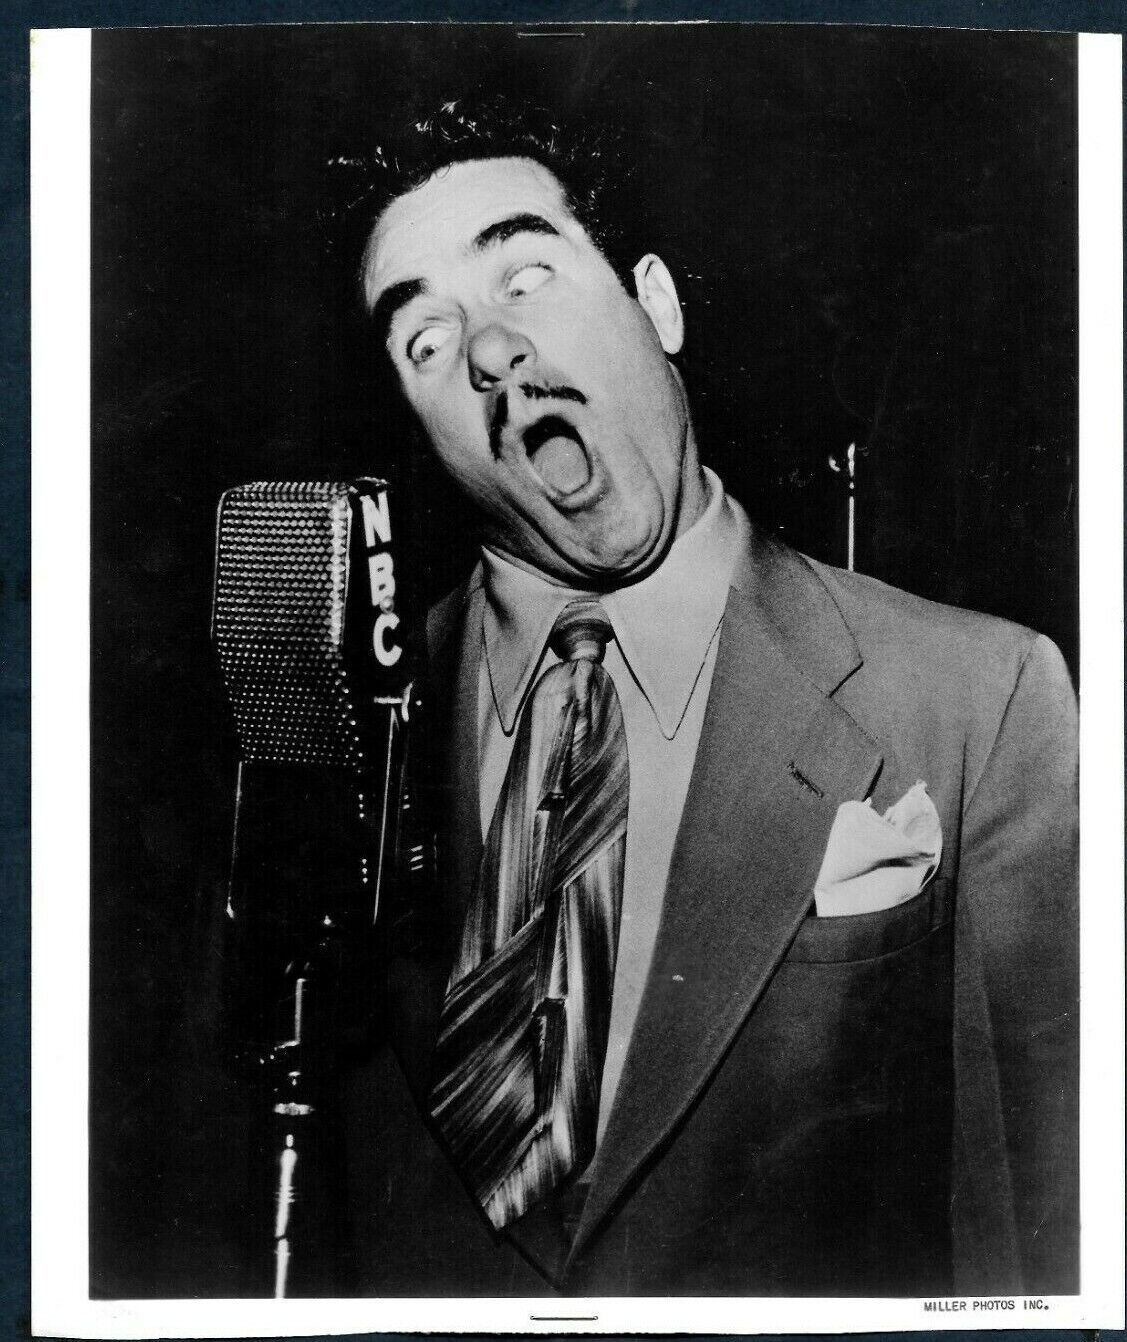 AMERICAN RADIO PERFORMER & VOCALIST JOSEPH CANDY CANDIDO 1940 MILLER Photo Y 192